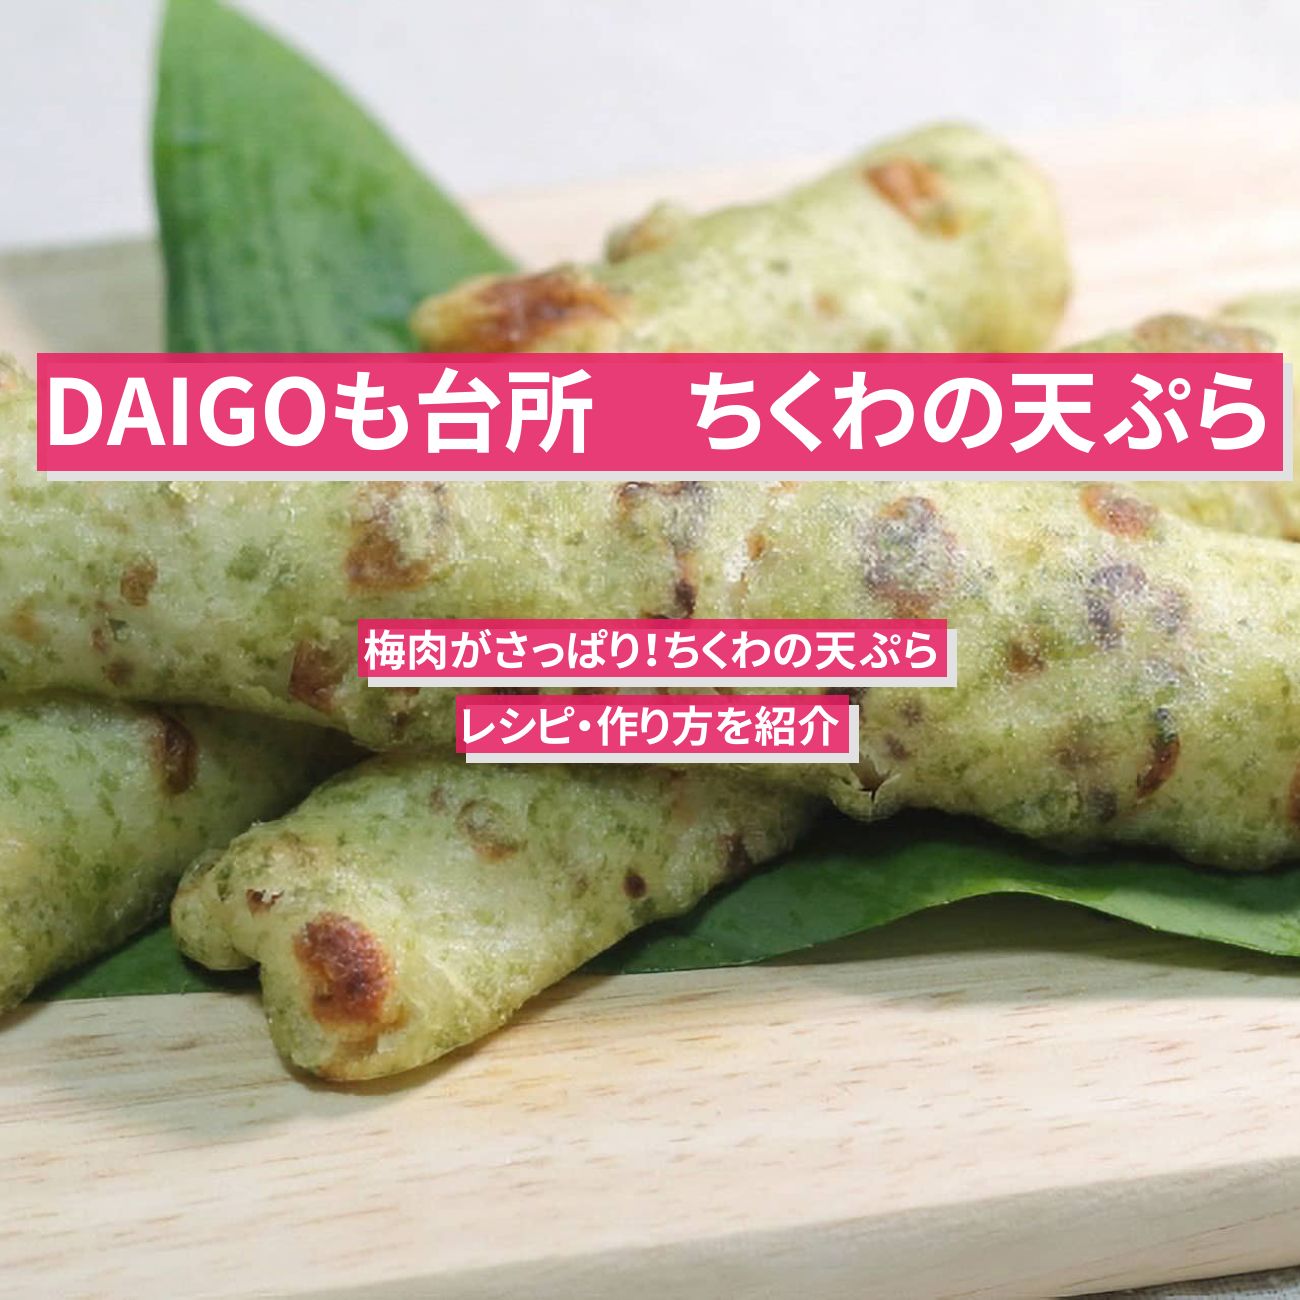 【DAIGOも台所】『ちくわの天ぷら』のレシピ・作り方を紹介